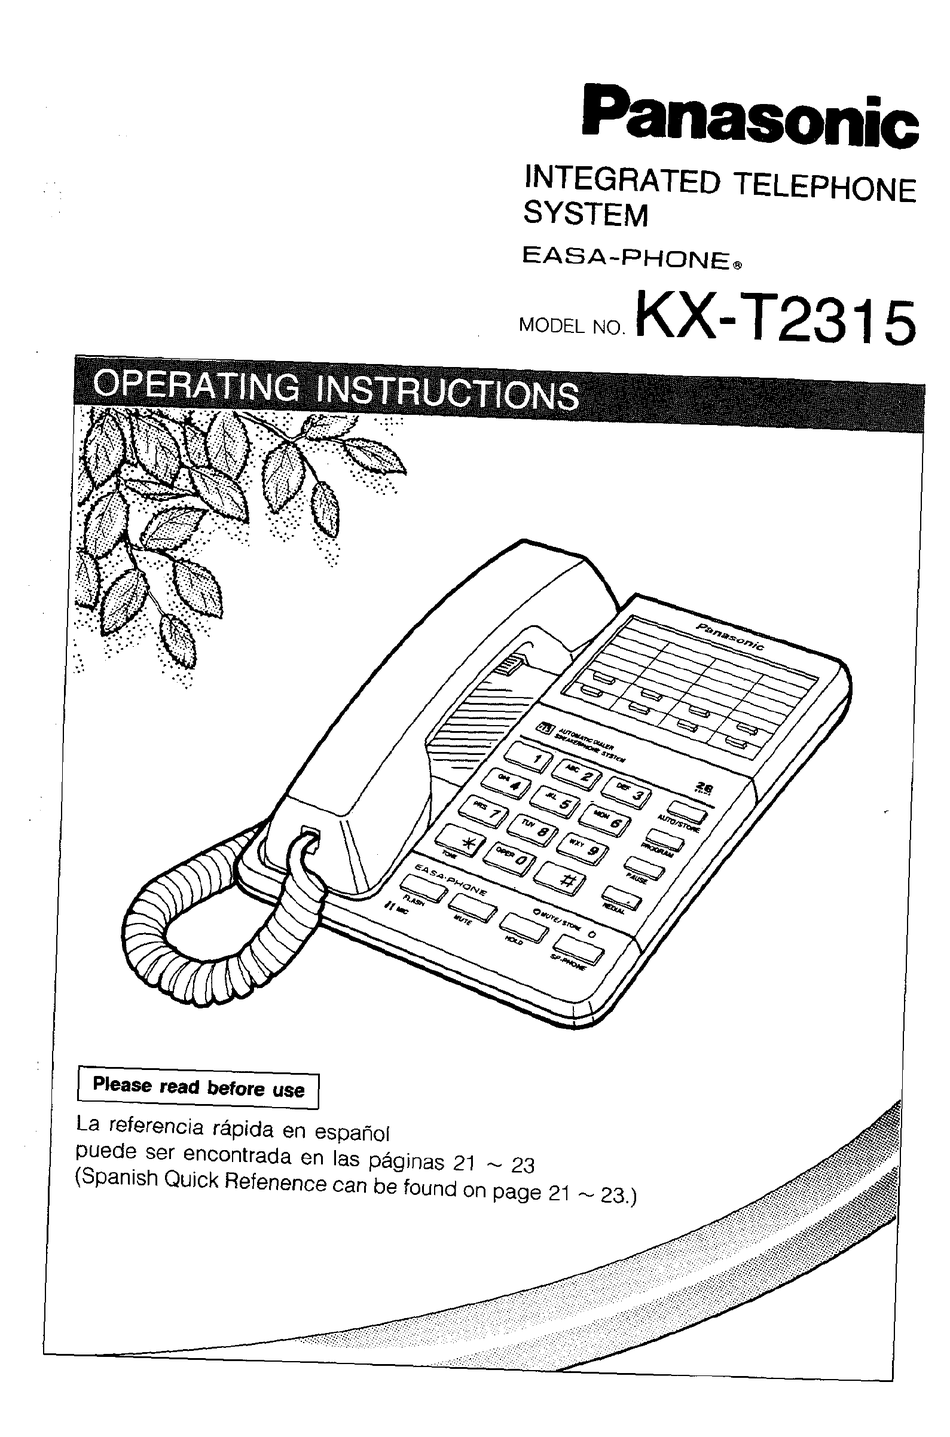 PANASONIC EASA-PHONE KX-T2315 OPERATING INSTRUCTIONS MANUAL Pdf